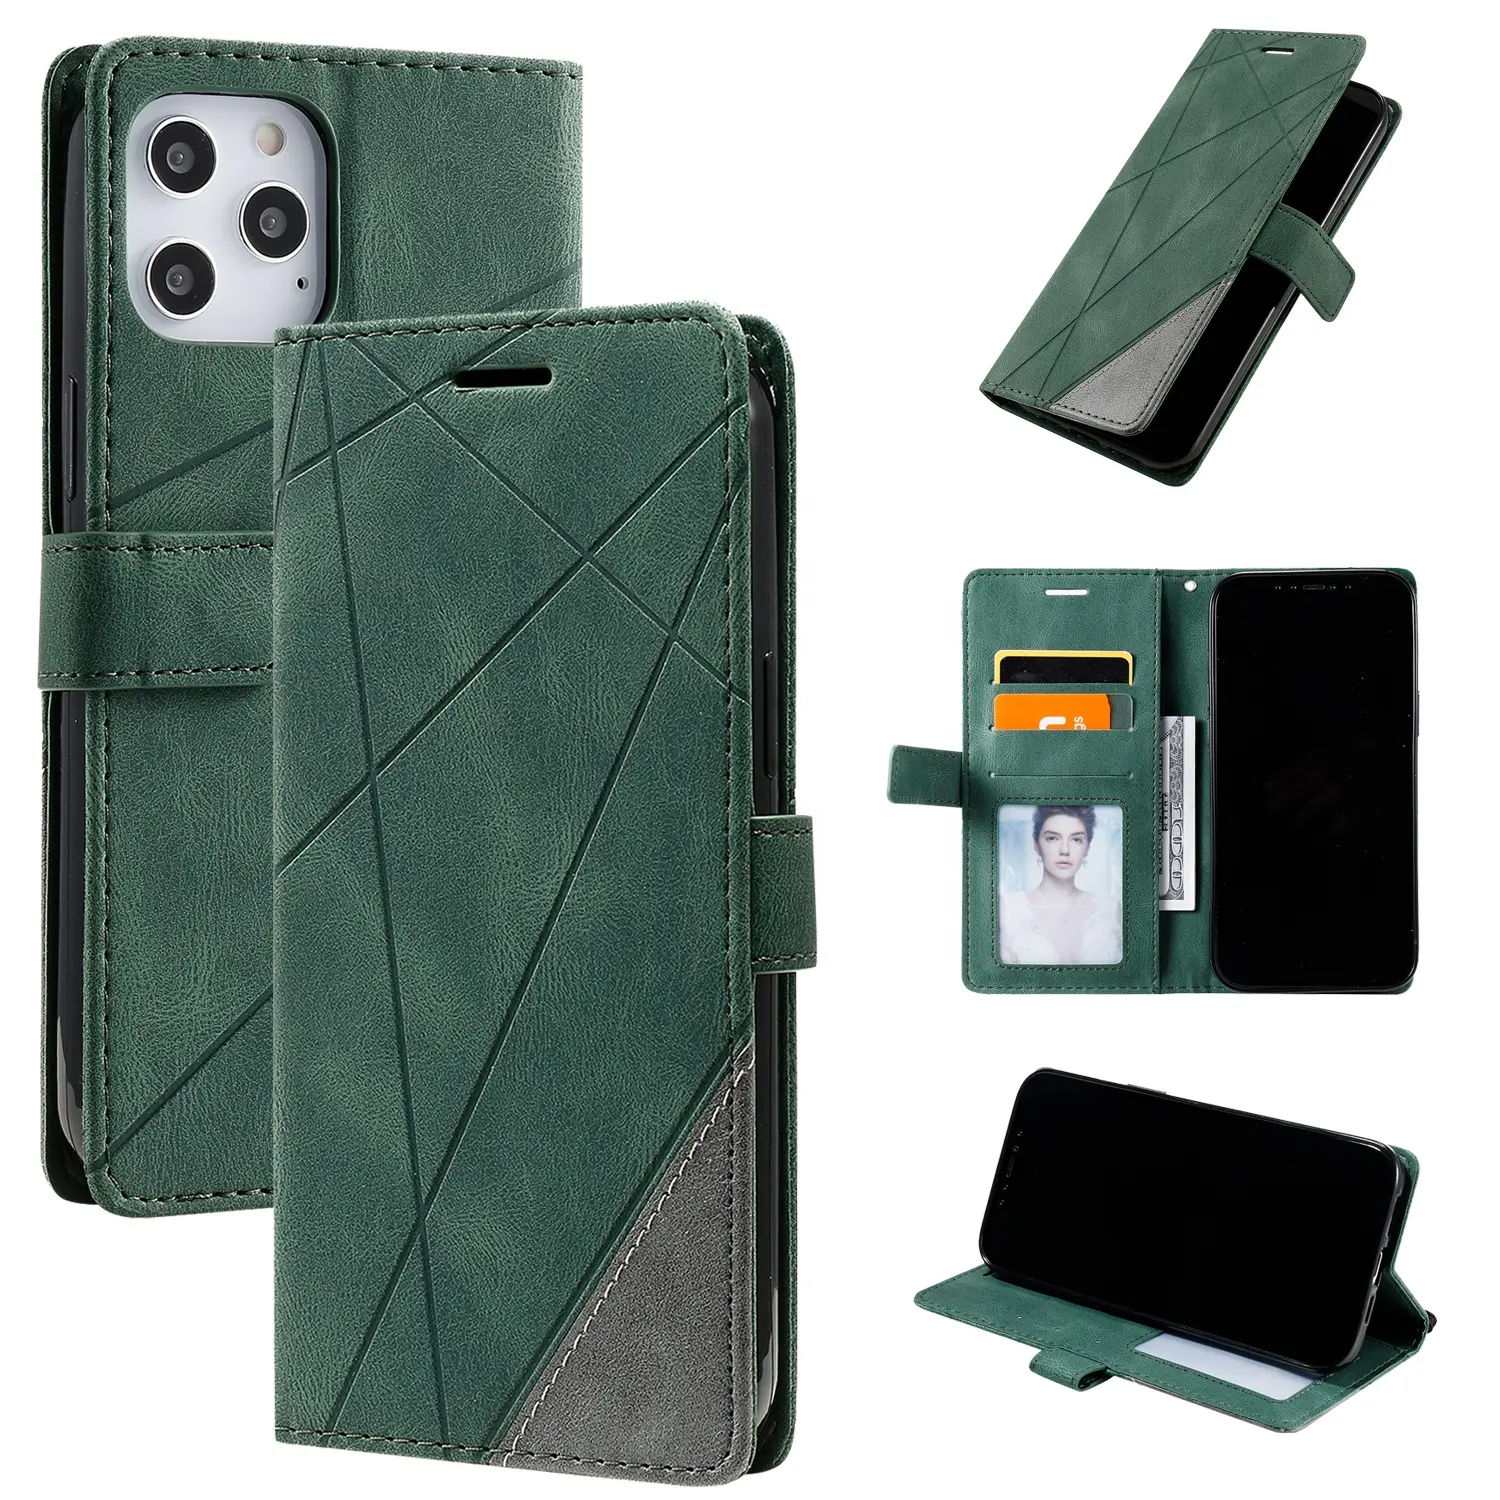 Ledertasche Handy hüllen Echtes Leder Flip Wallet Handy hülle für iPhone 12 Mini/12/12 Pro/12 Pro Max Handy hülle